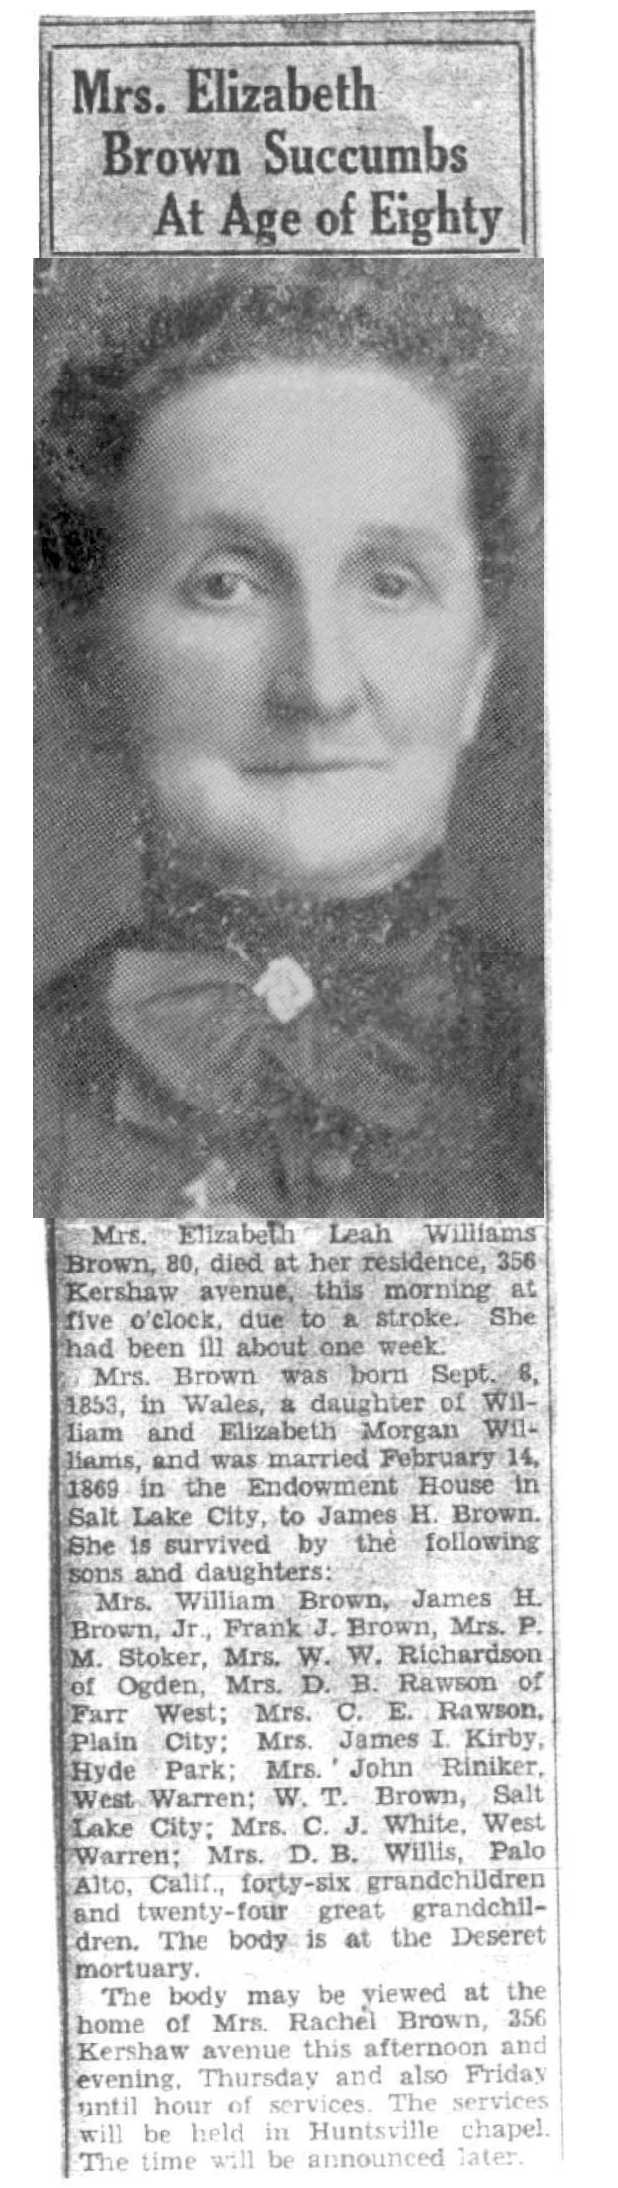 Elizabeth Leah Williams Brown 1853-1934